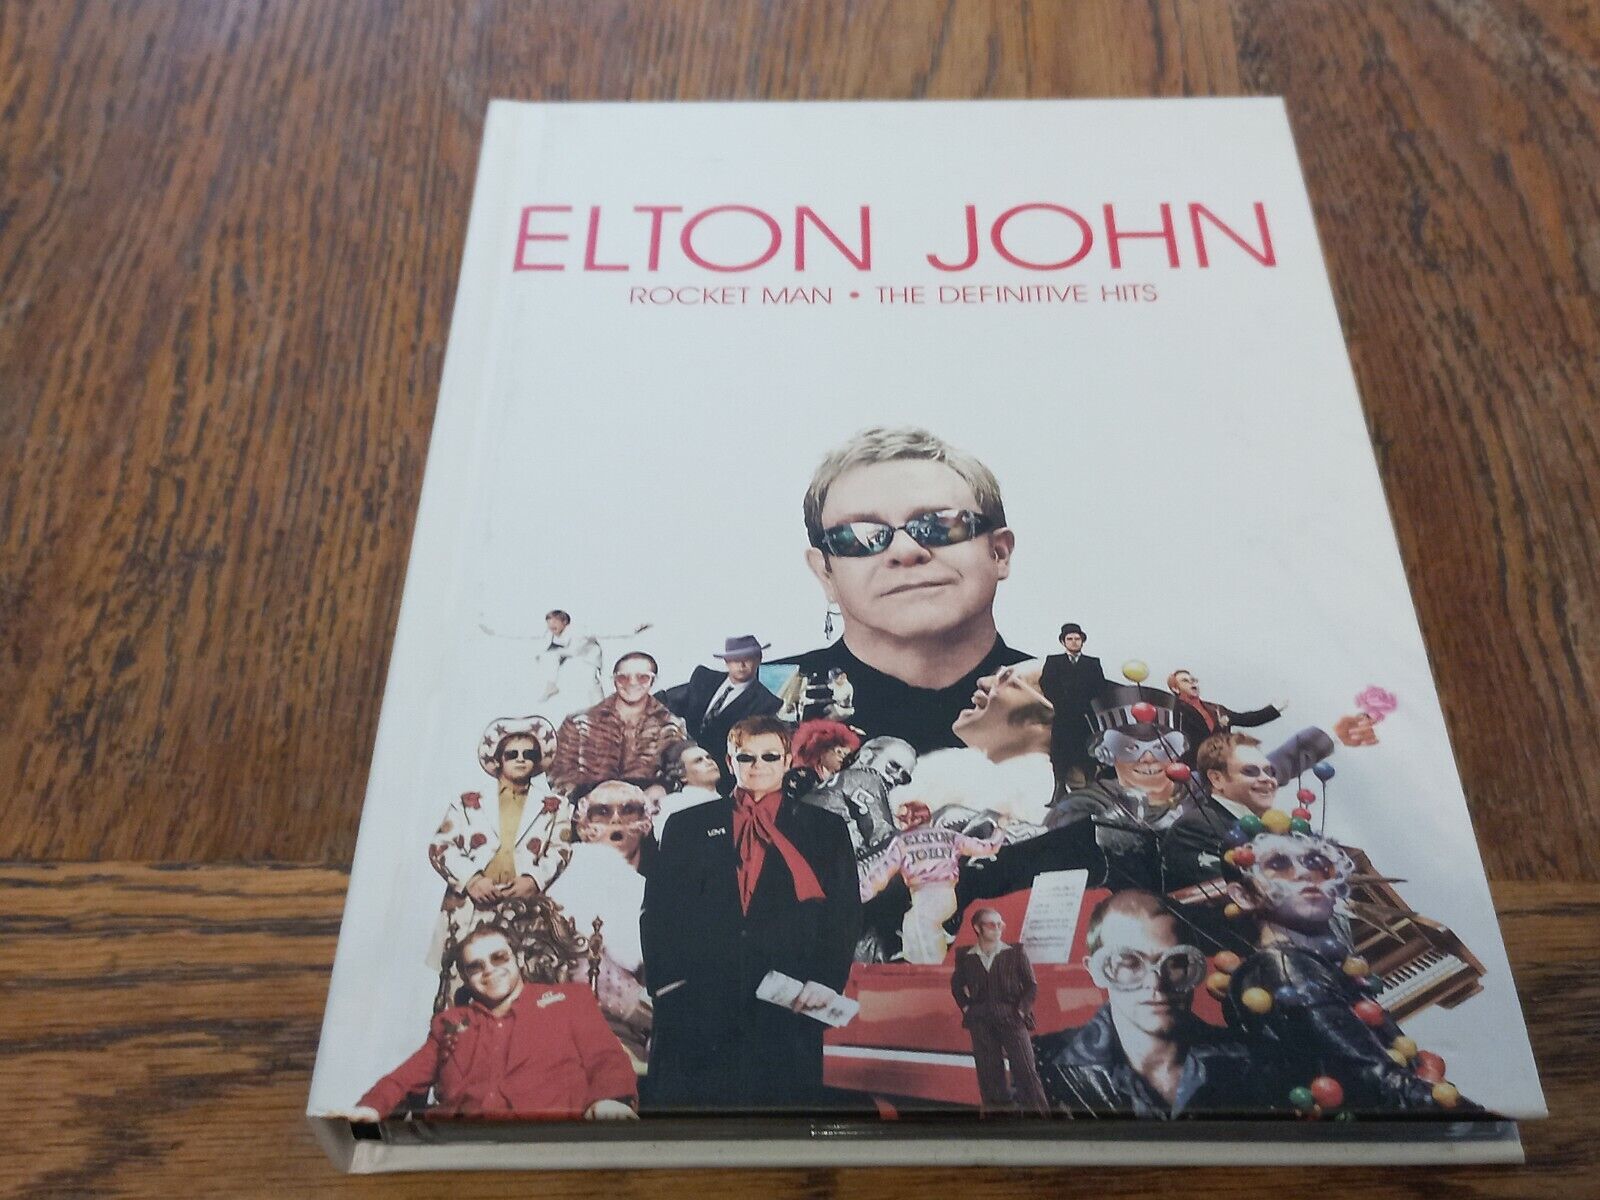 Elton John - Rocket Man The Definitive Hits CD + DVD + BOOK - in VGC